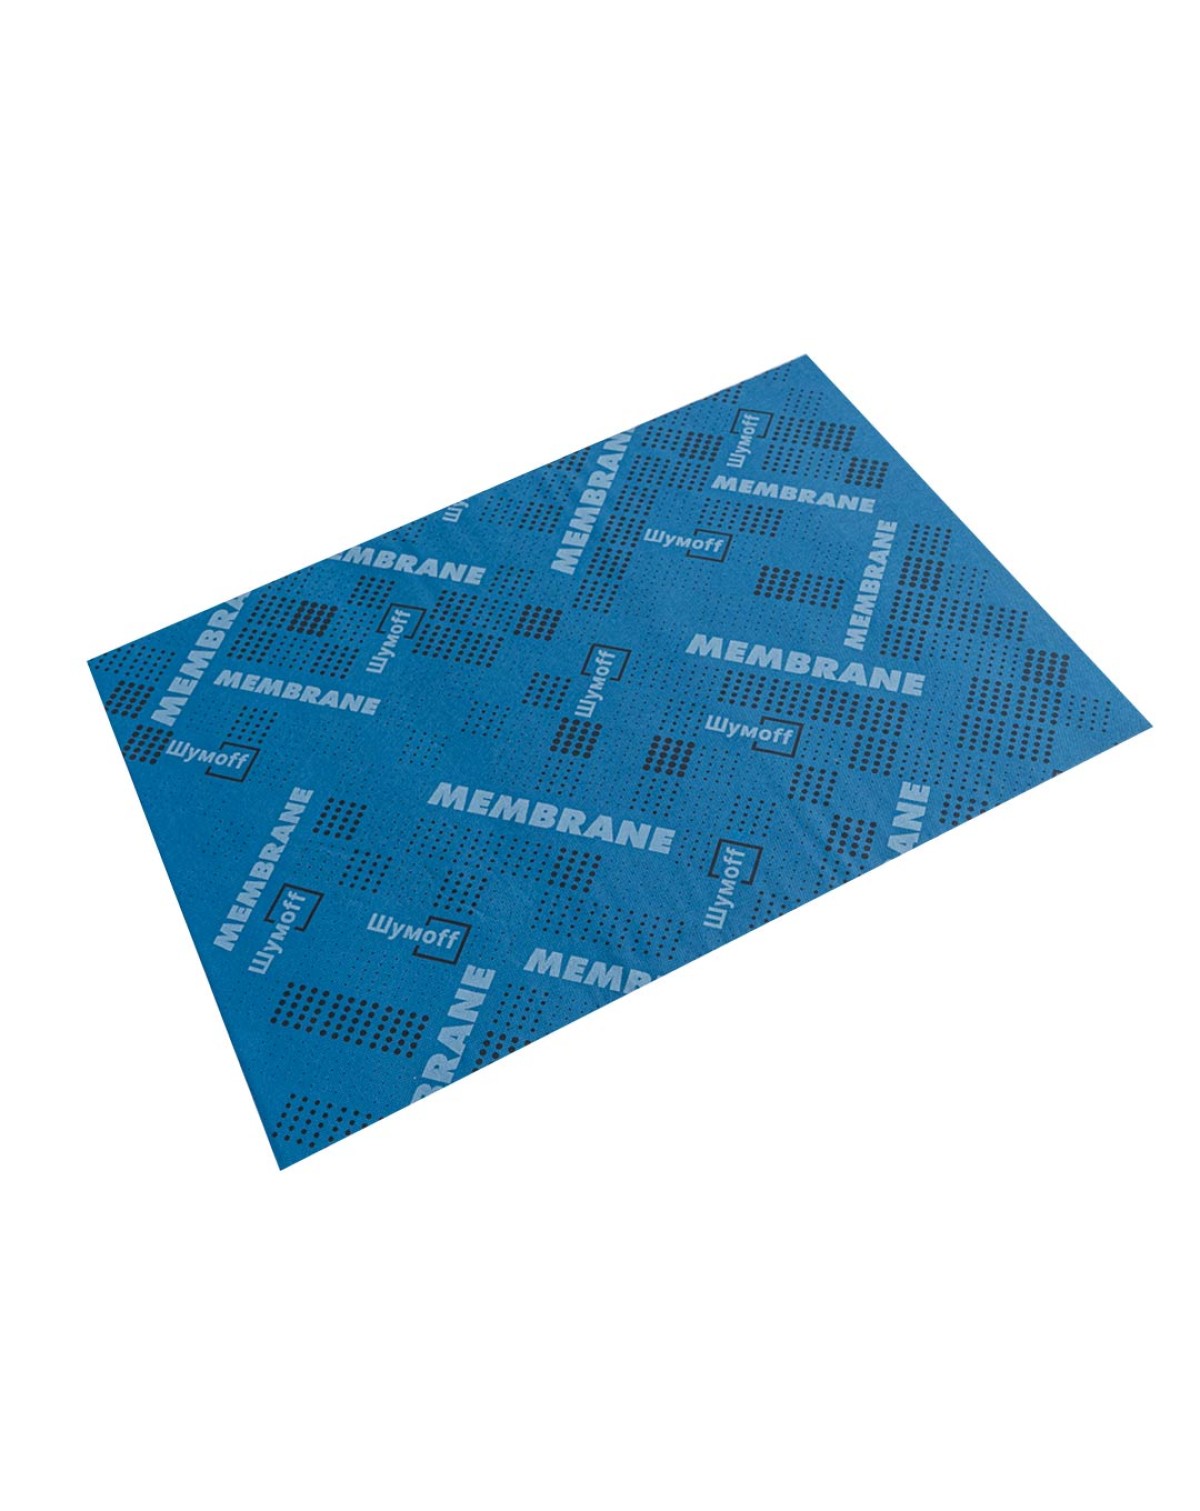 Шумопоглощающий материал для авто Шумофф Membrane (4 лист) 75х100 см голубой, 2.7 мм